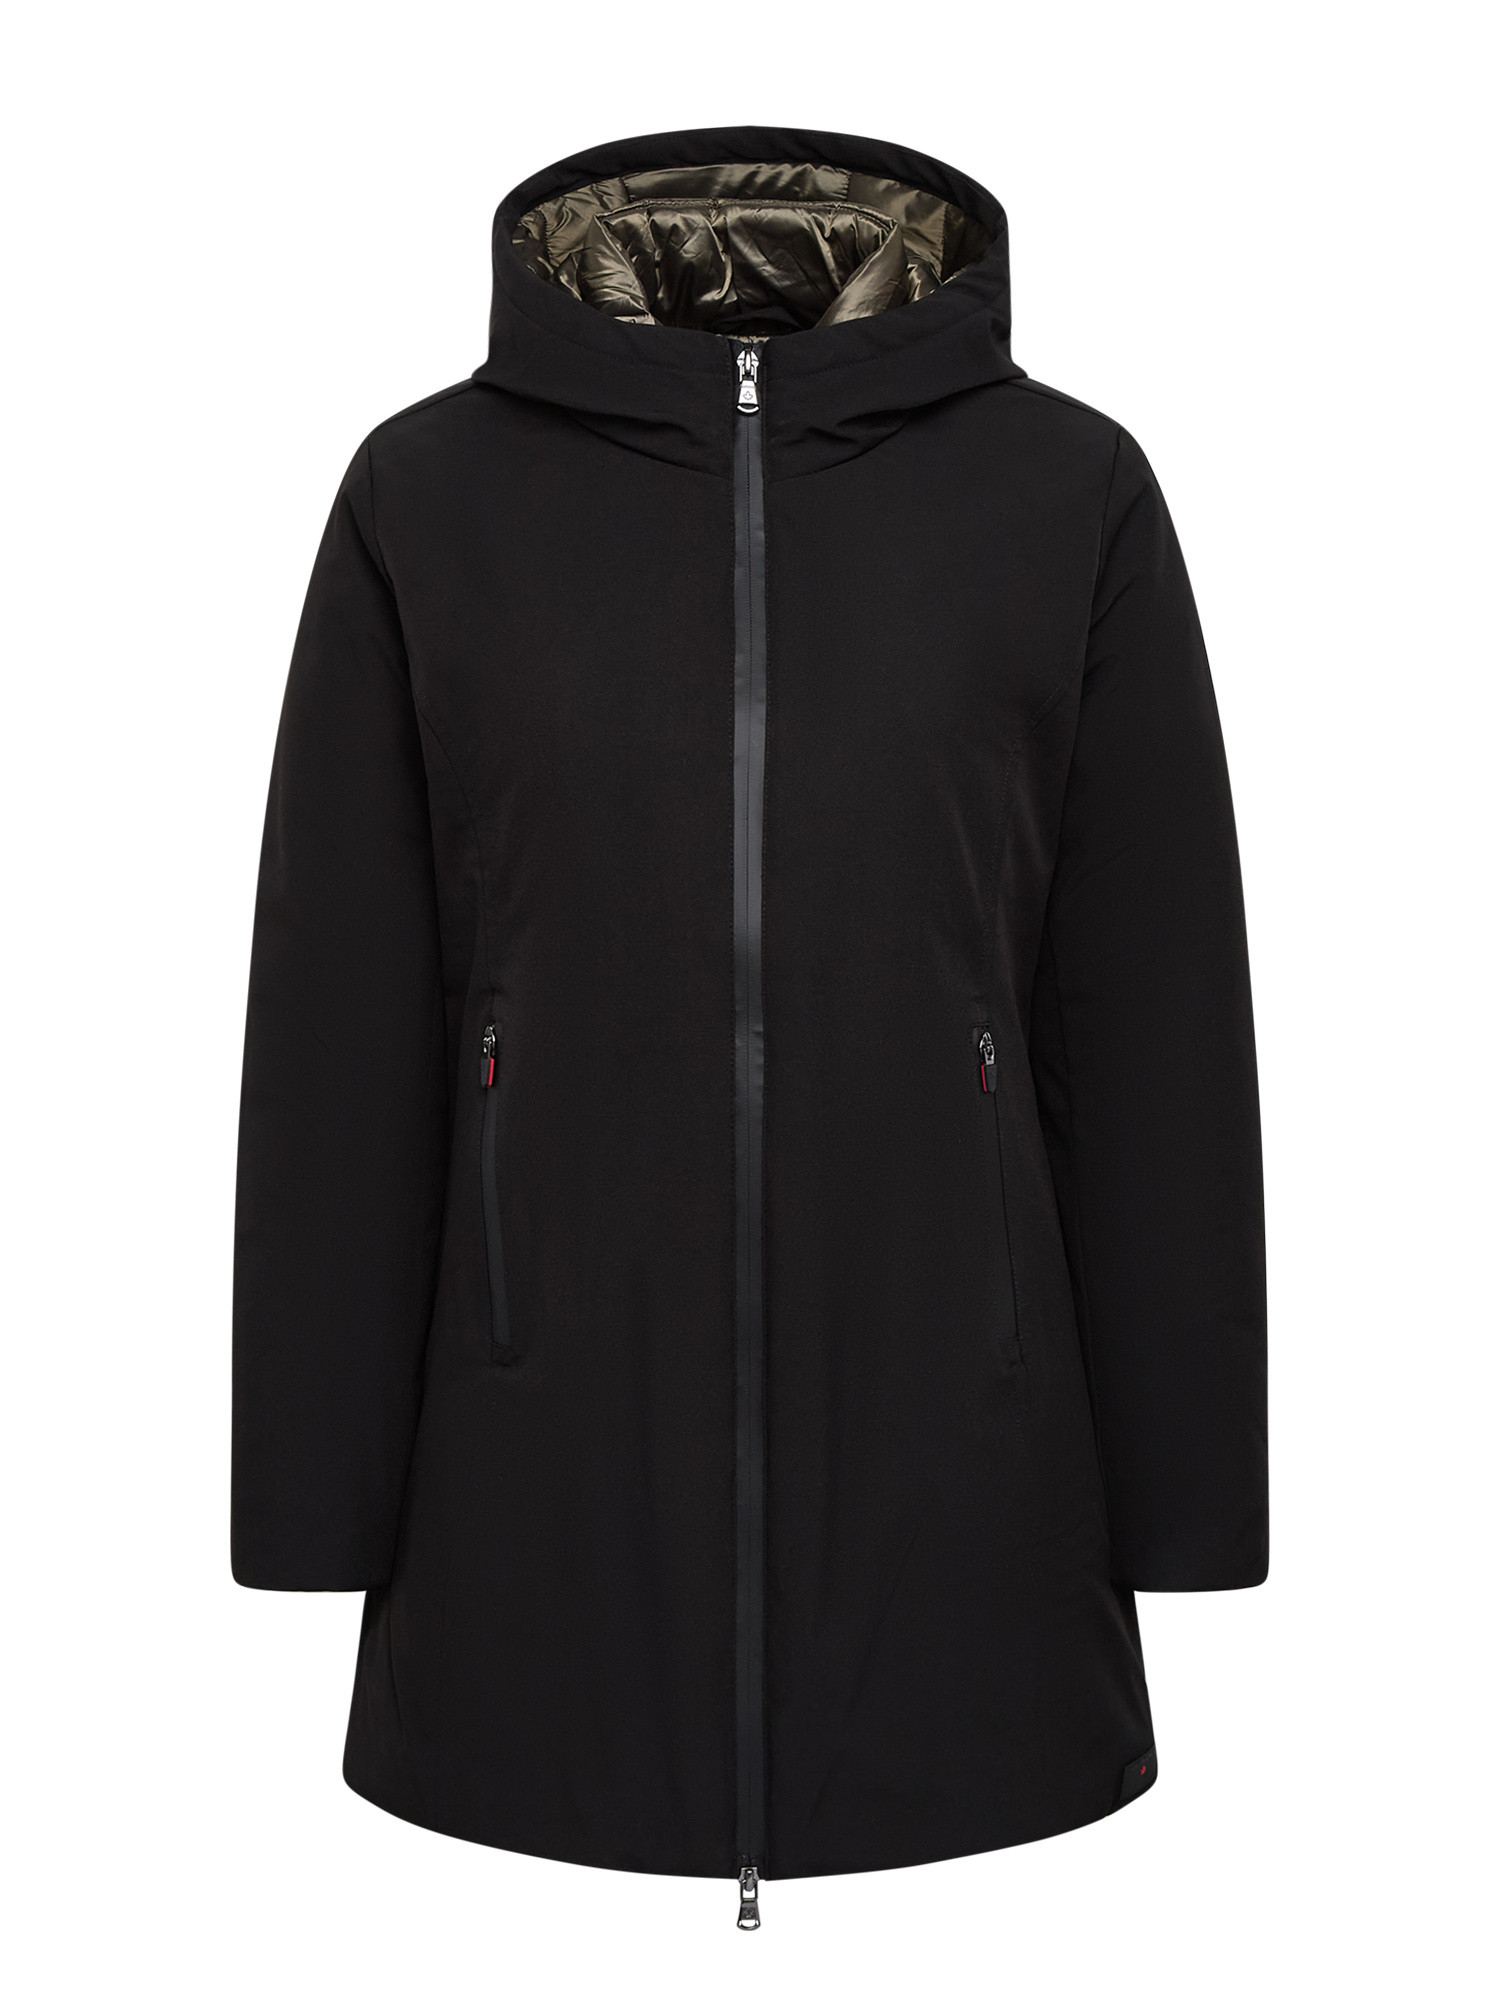 Canadian - Yorkton Long Jacket, Black, large image number 0